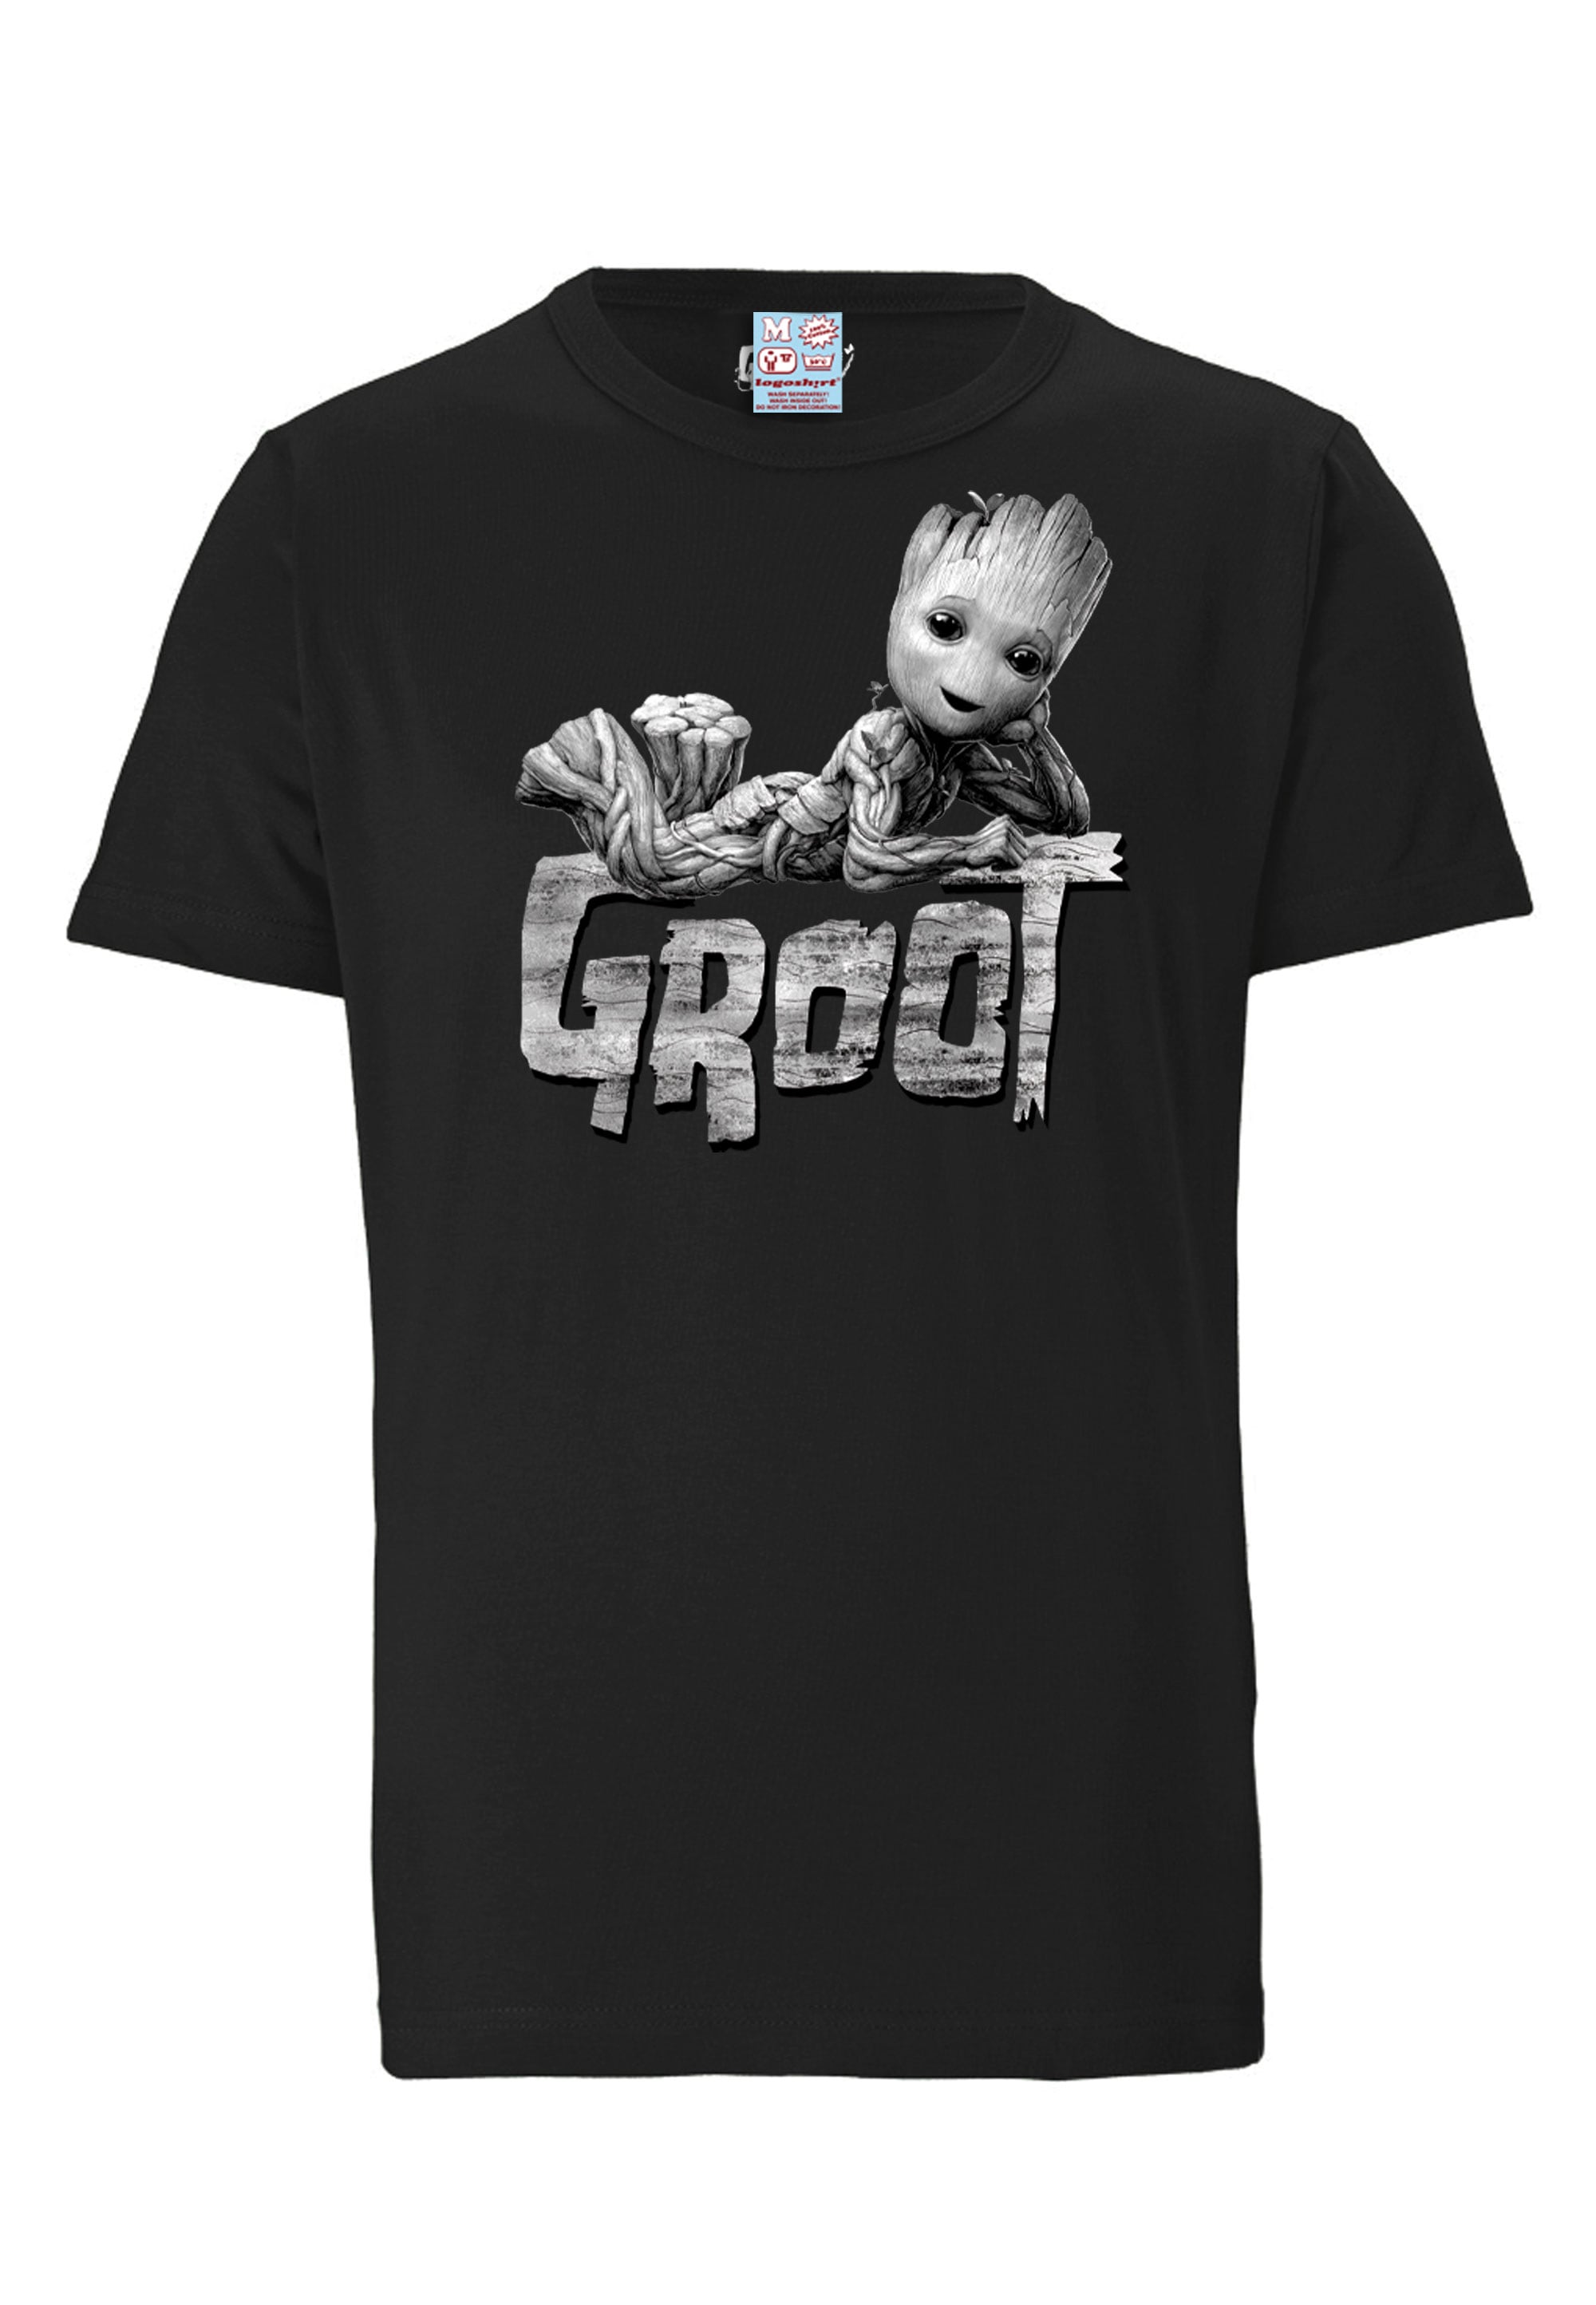 LOGOSHIRT T-Shirt »Marvel - Groot«, mit witzigem Groot Print kaufen | BAUR